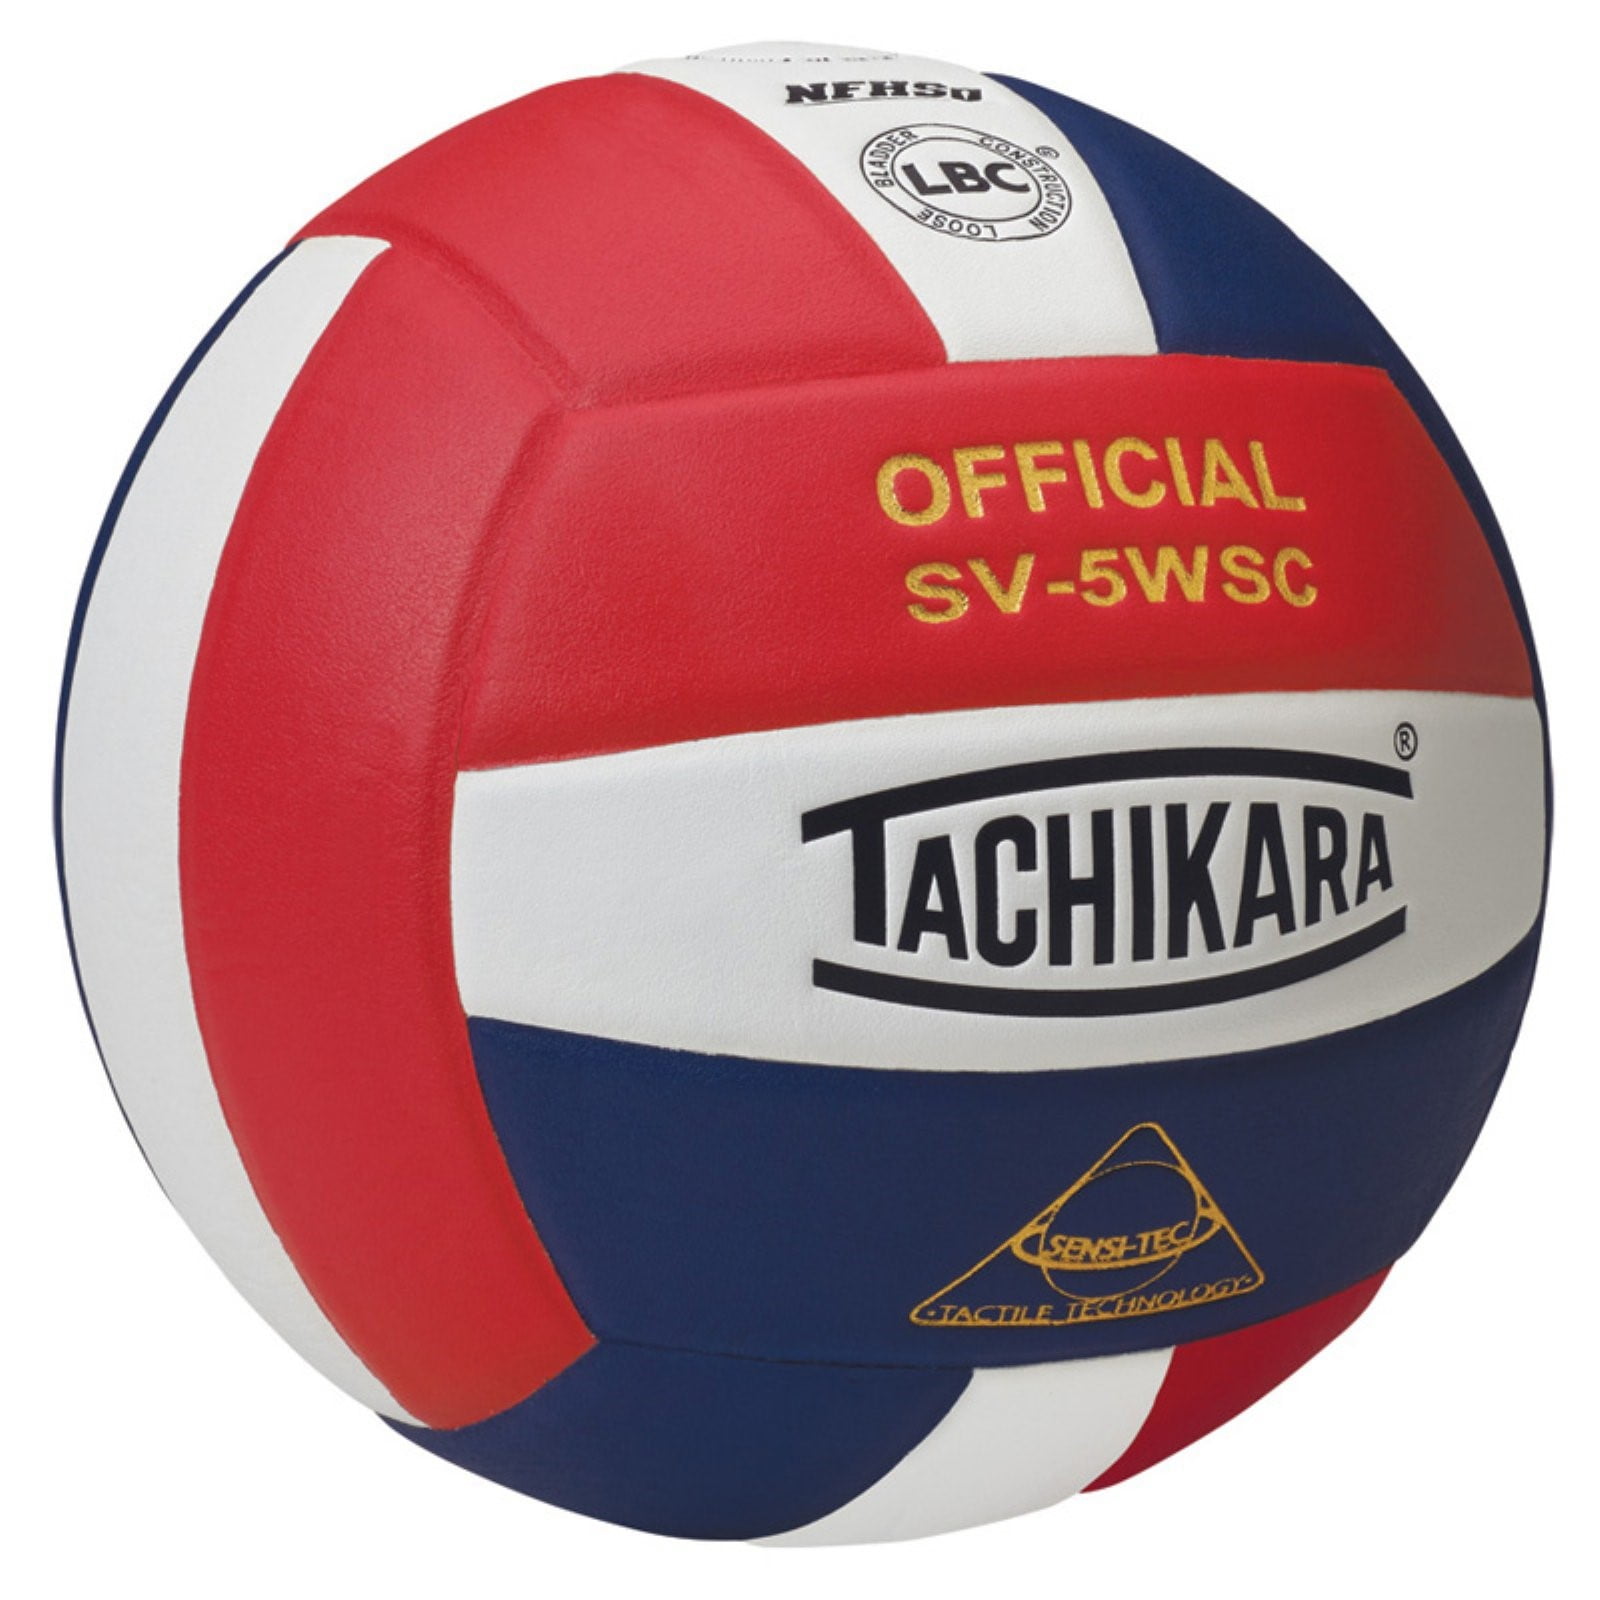 Tachikara SV5WSC Sensi Tec®  Composite High Performance Volleyball 